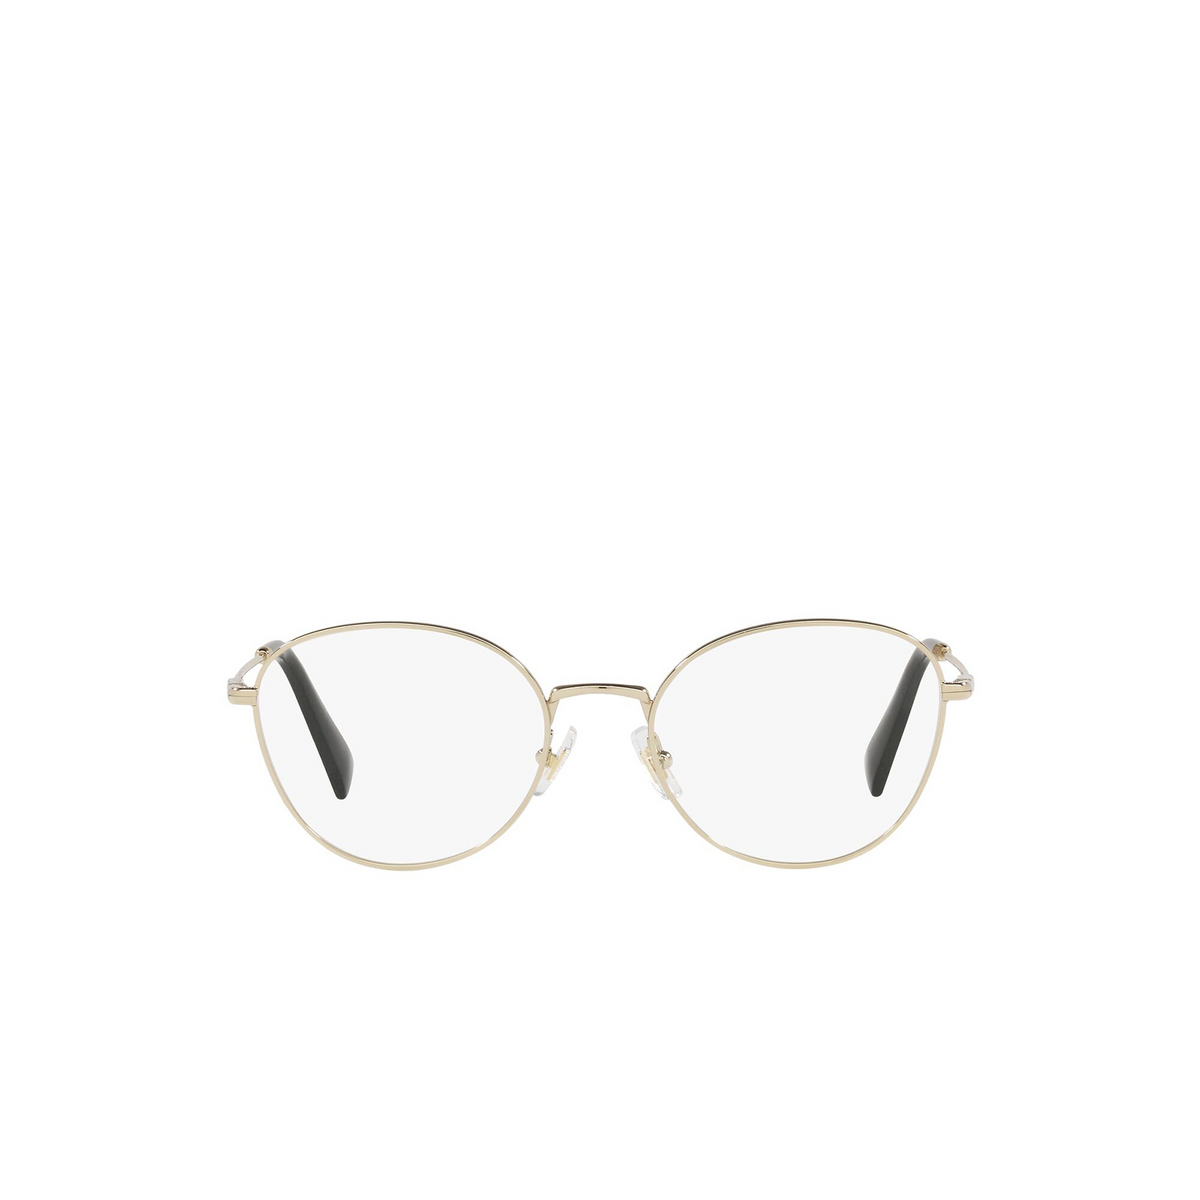 Miu Miu® Cat-eye Eyeglasses: MU 50UV color Pale Gold ZVN1O1 - front view.